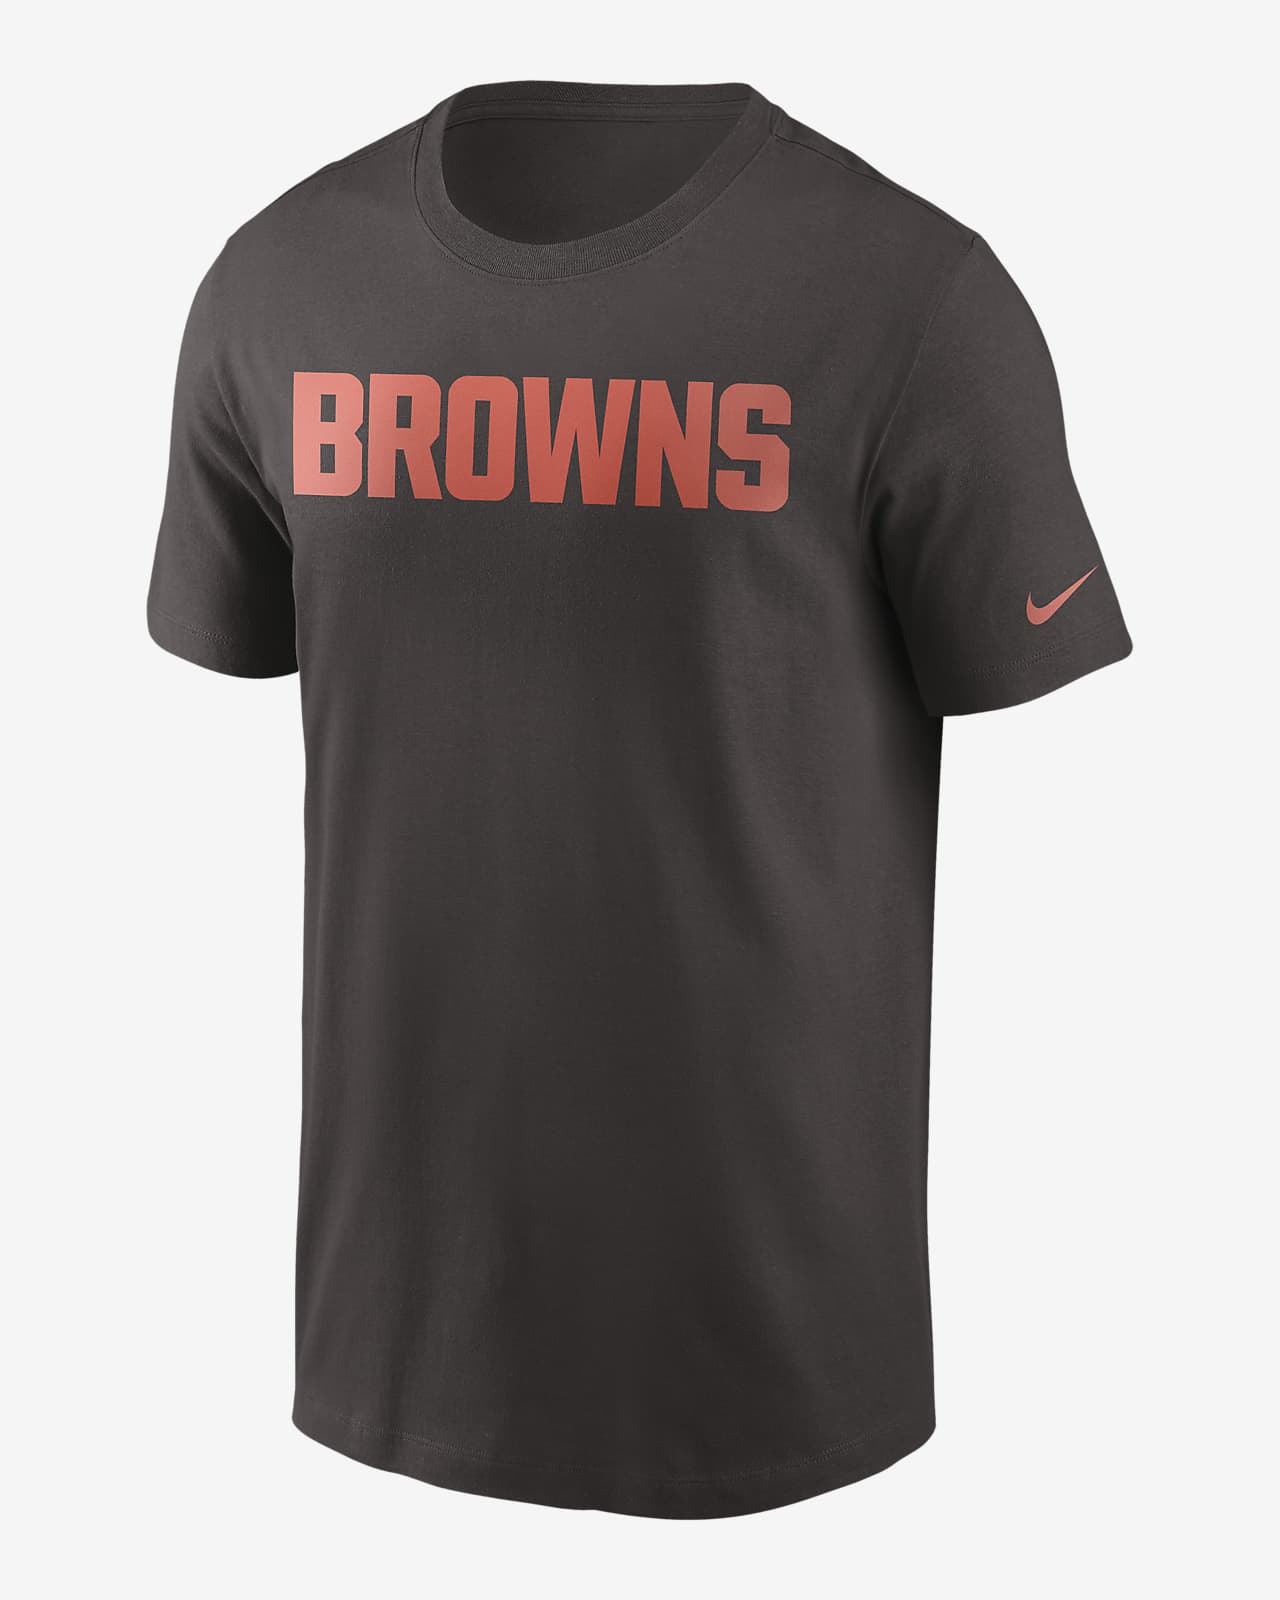 Nike (NFL Cleveland Browns) Men's T-Shirt